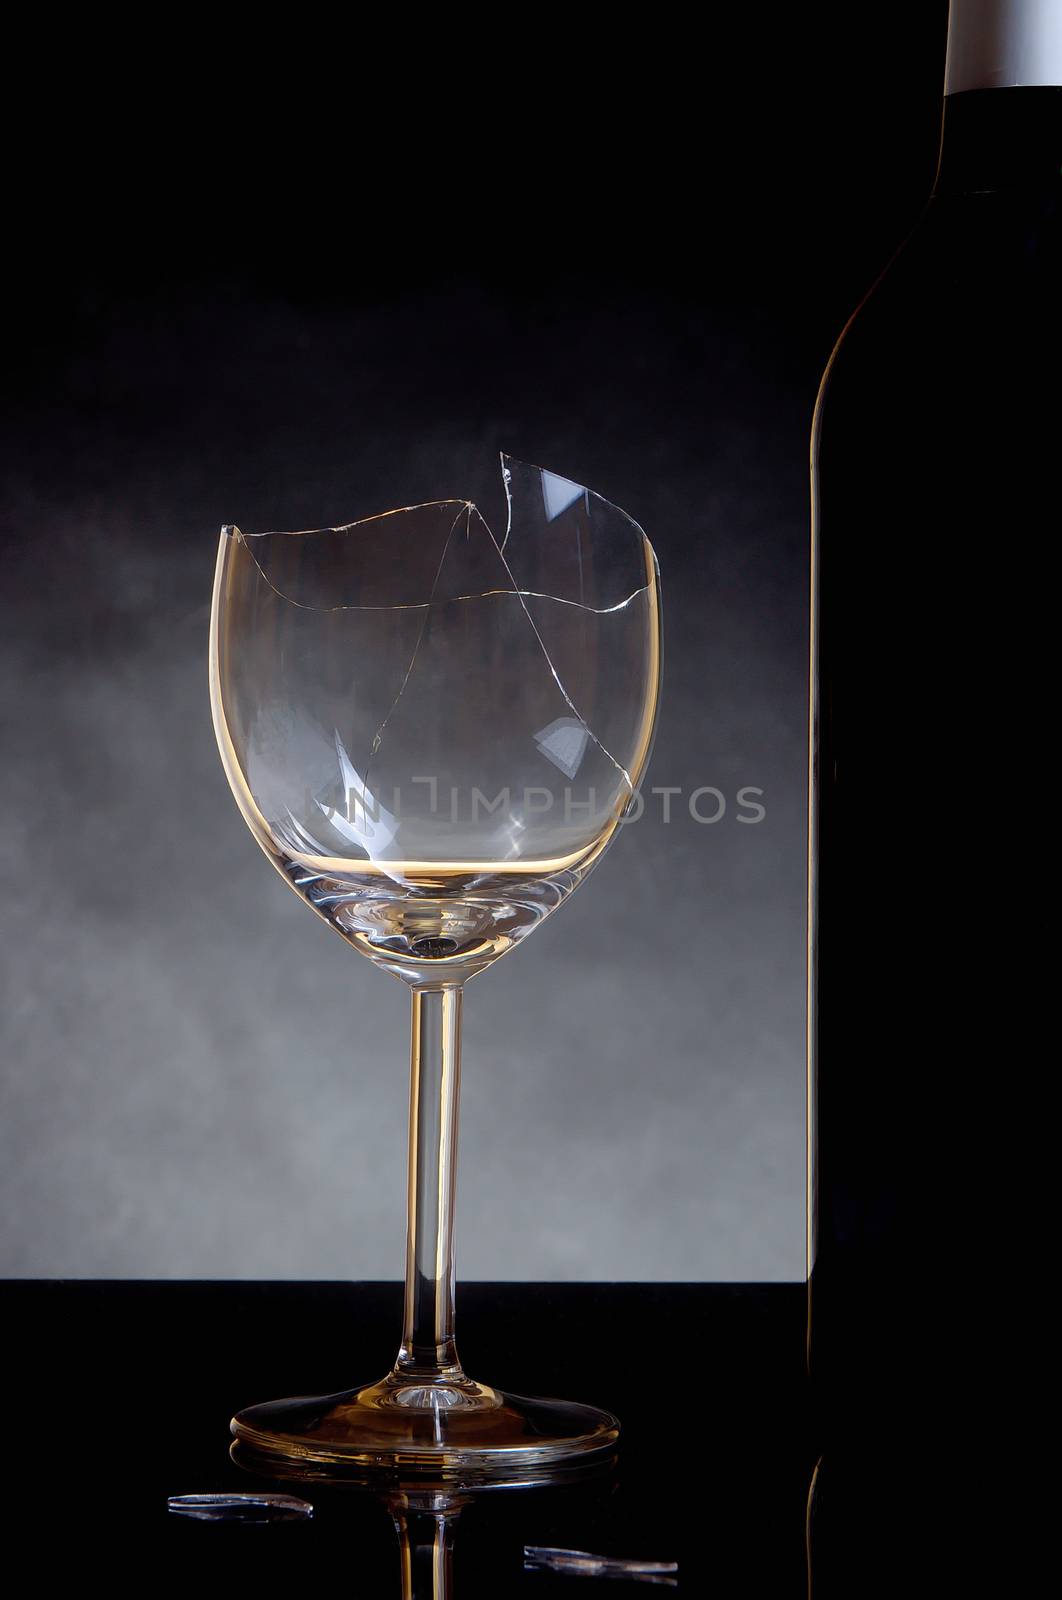 Vine bottle and broken glass on dark background by anderm